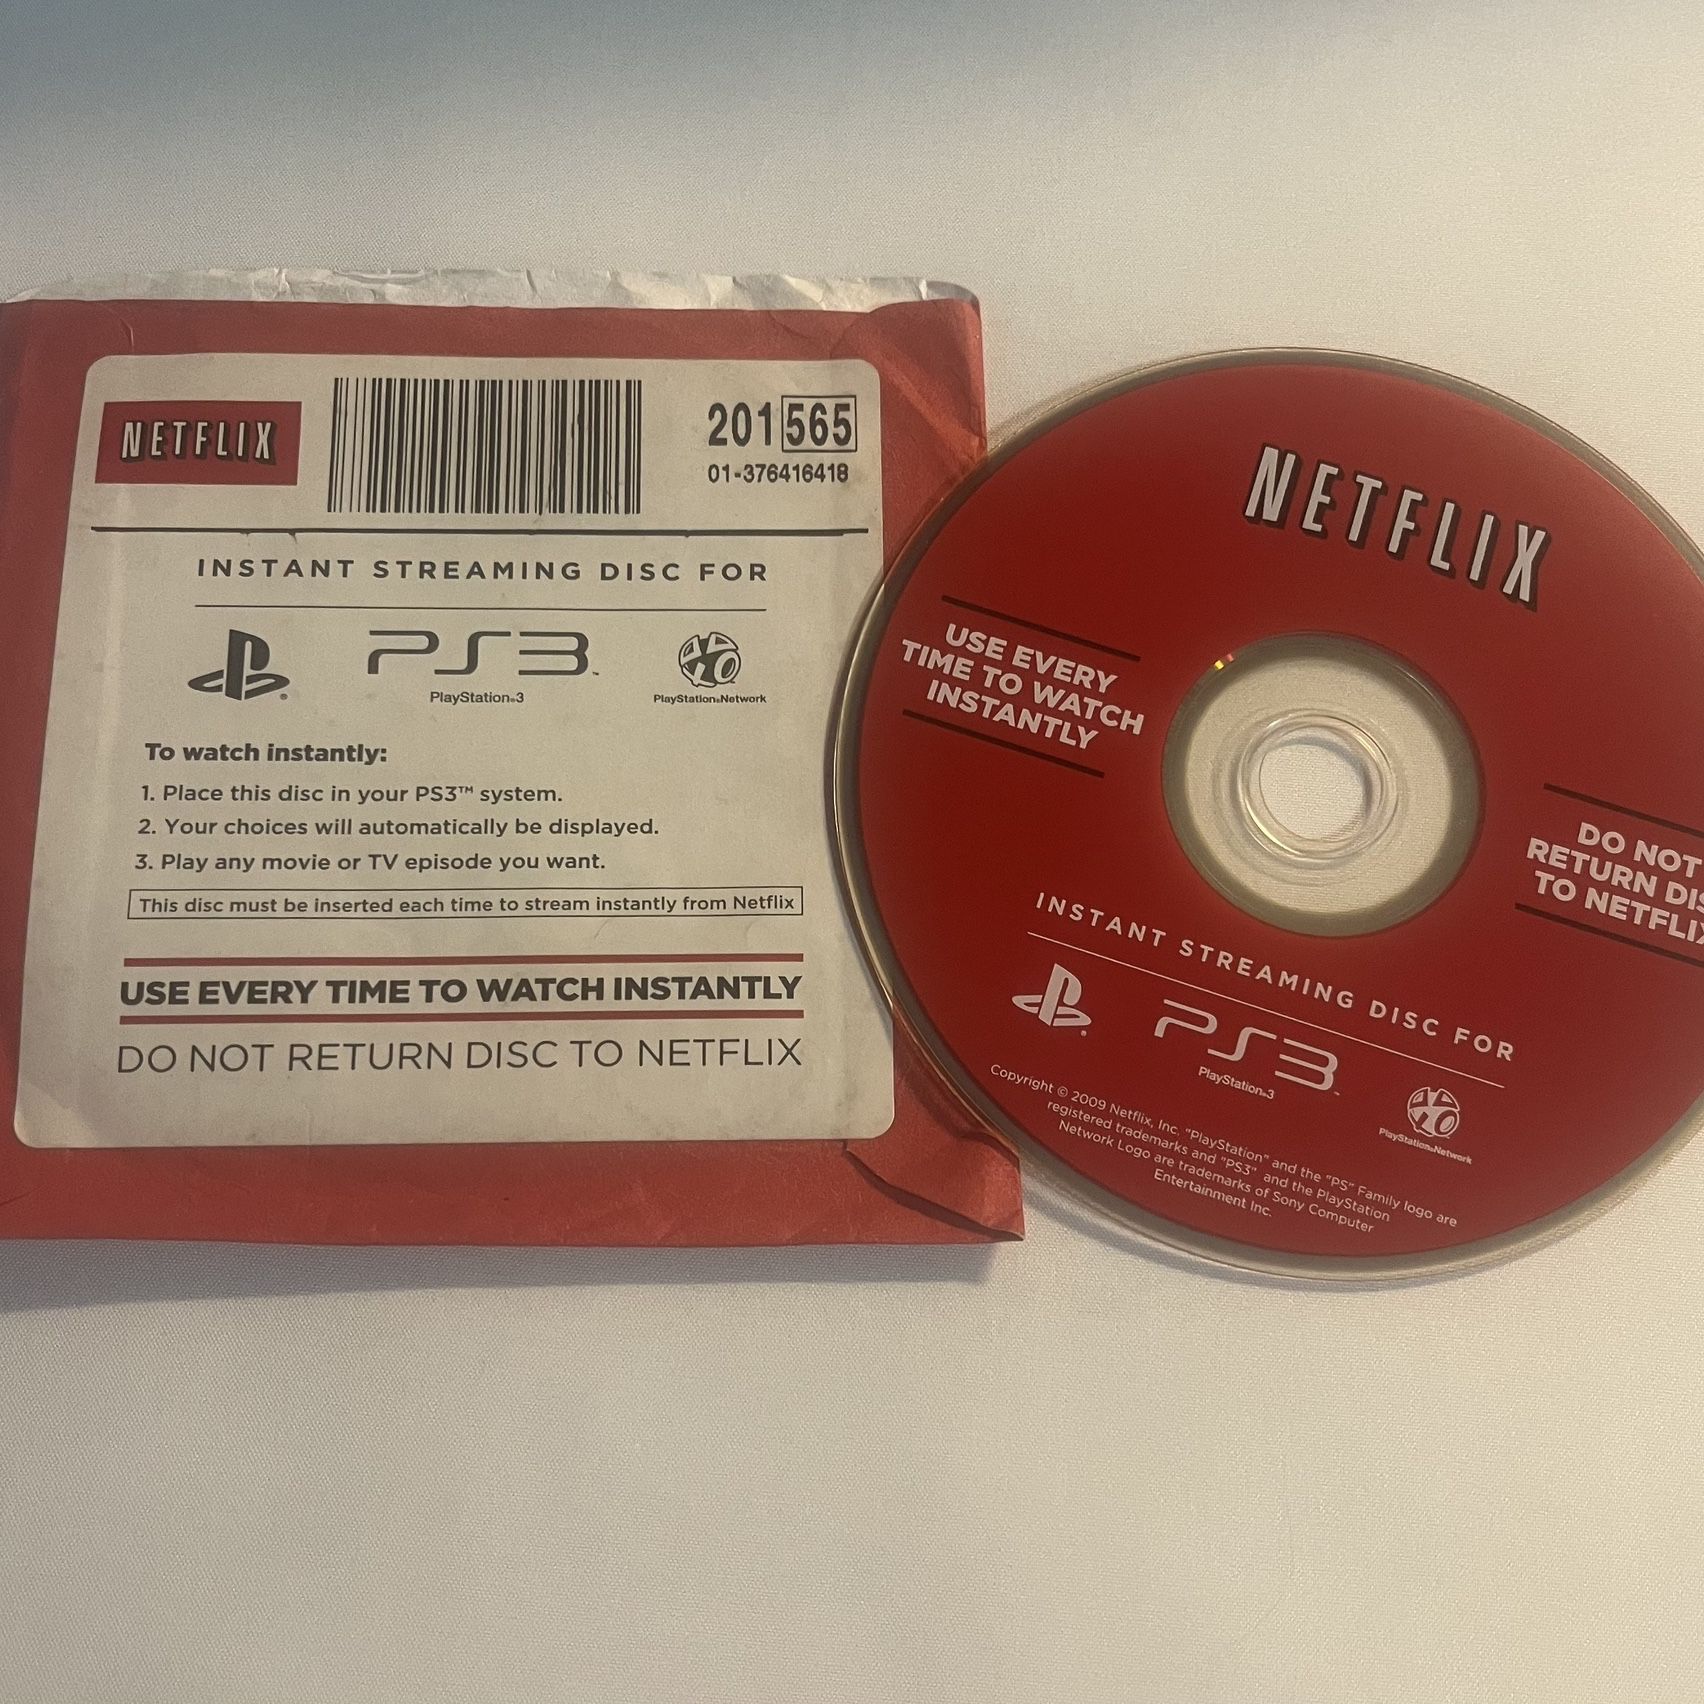 Problemas ao acessar a Netflix via PS3?